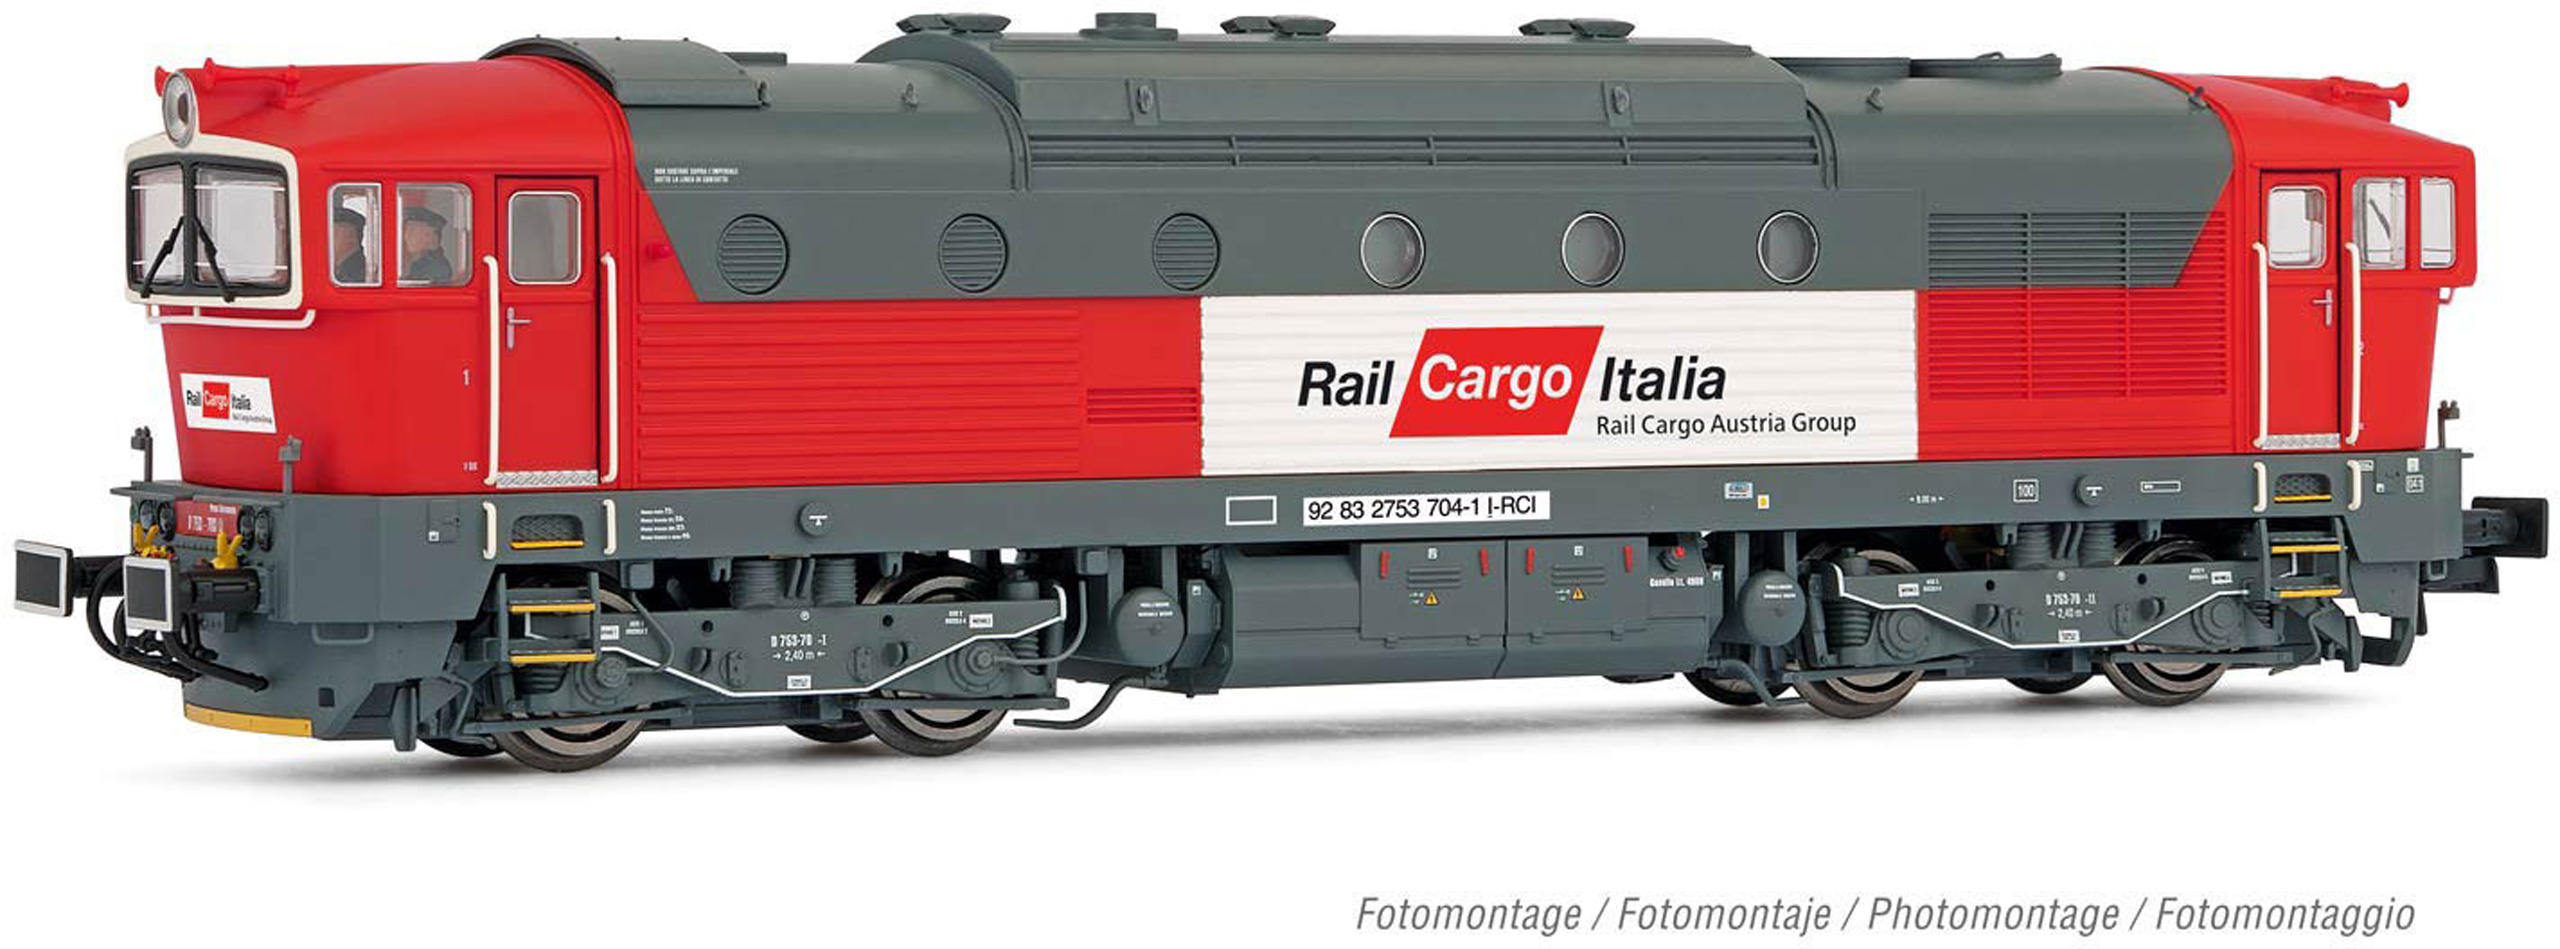 HORNBY HR2863 LOCO DIESEL D753 RAIL CARGO ITALIA